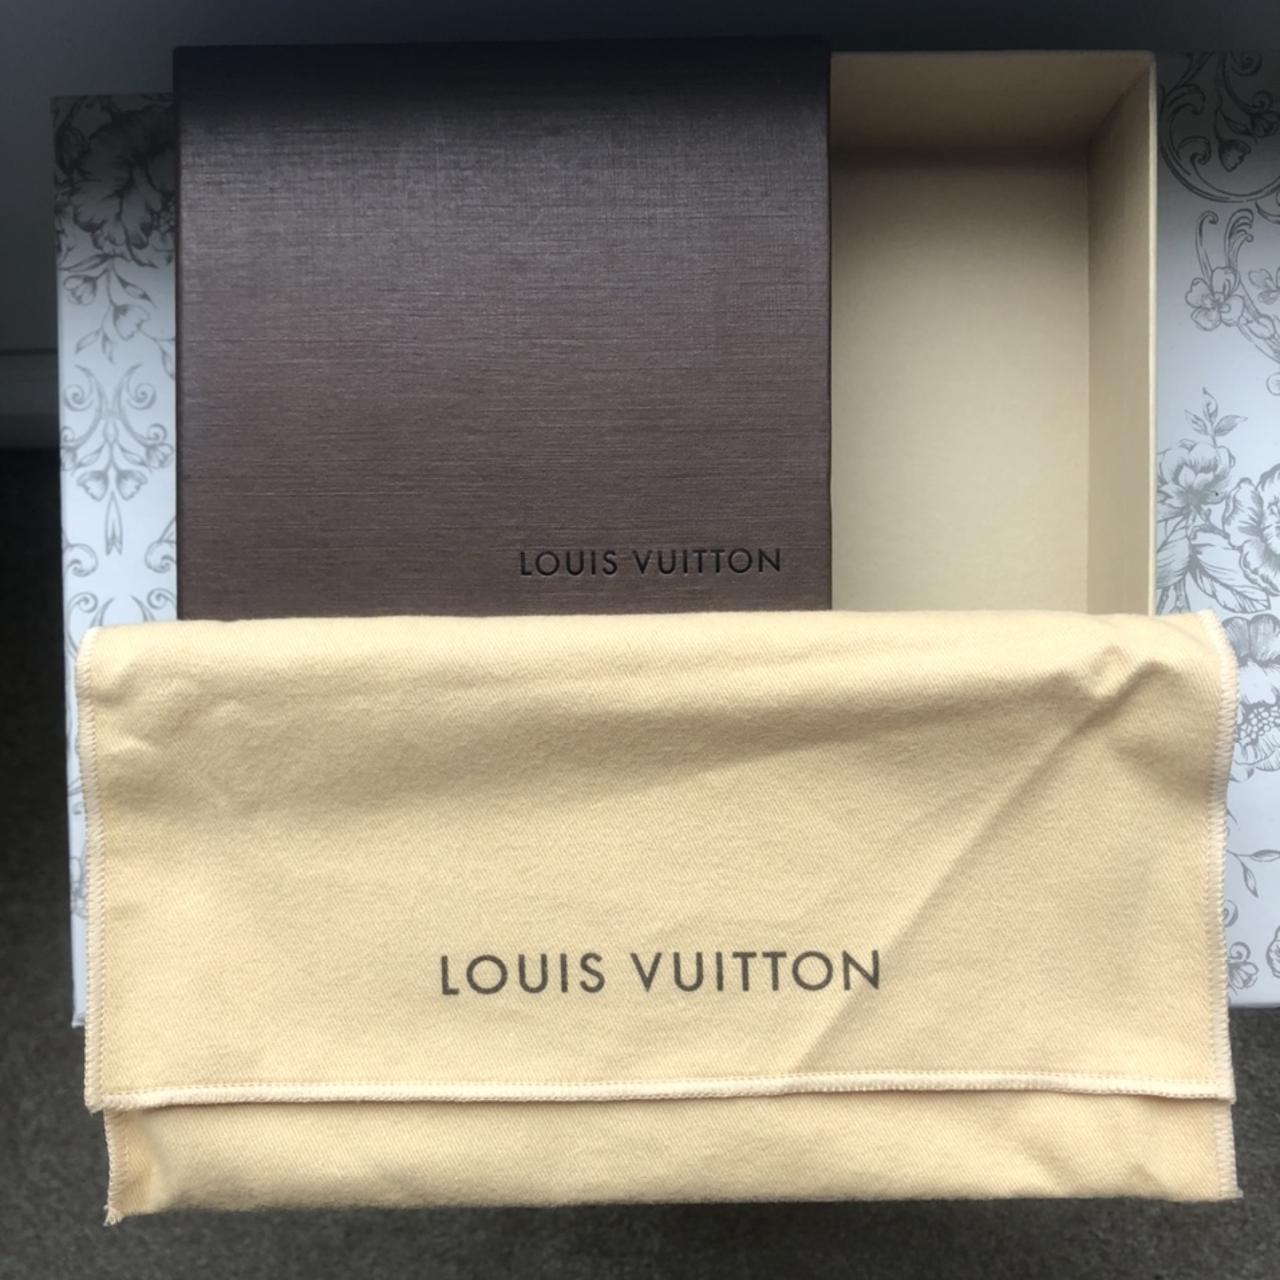 Original Louis Vuitton Purse Box and Dust